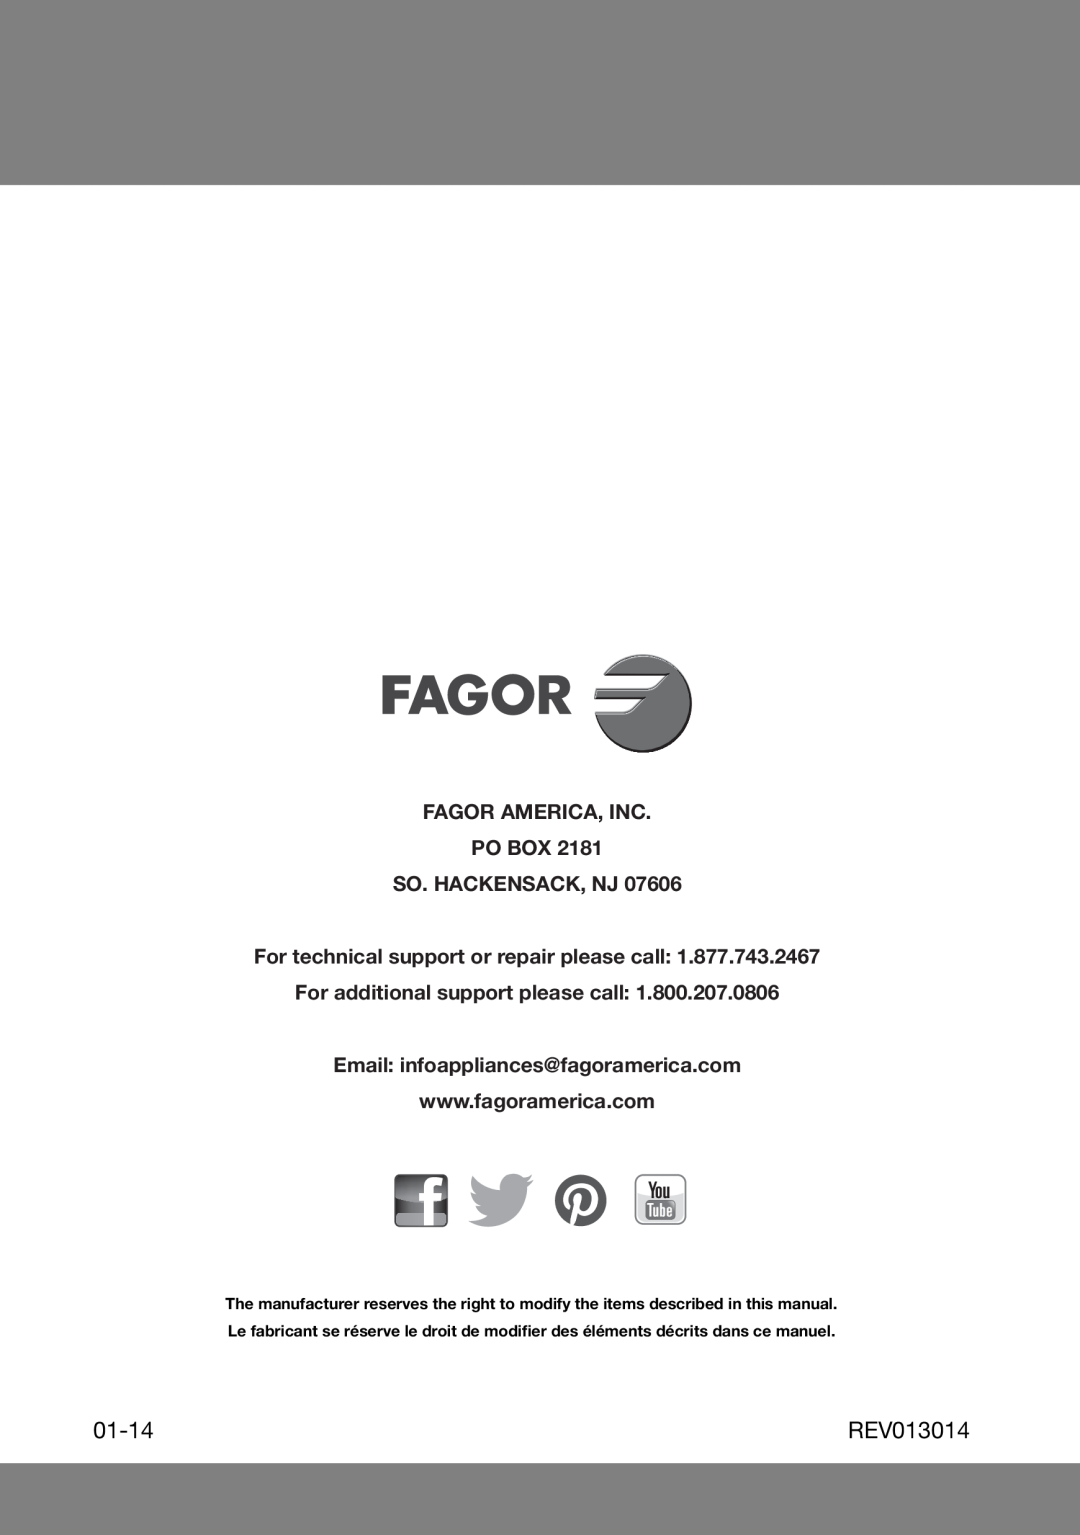 Fagor America RFA-365 DF, RFA-244 DF manual 01-14, REV013014, Fagor America, Inc Po Box So. Hackensack, Nj 